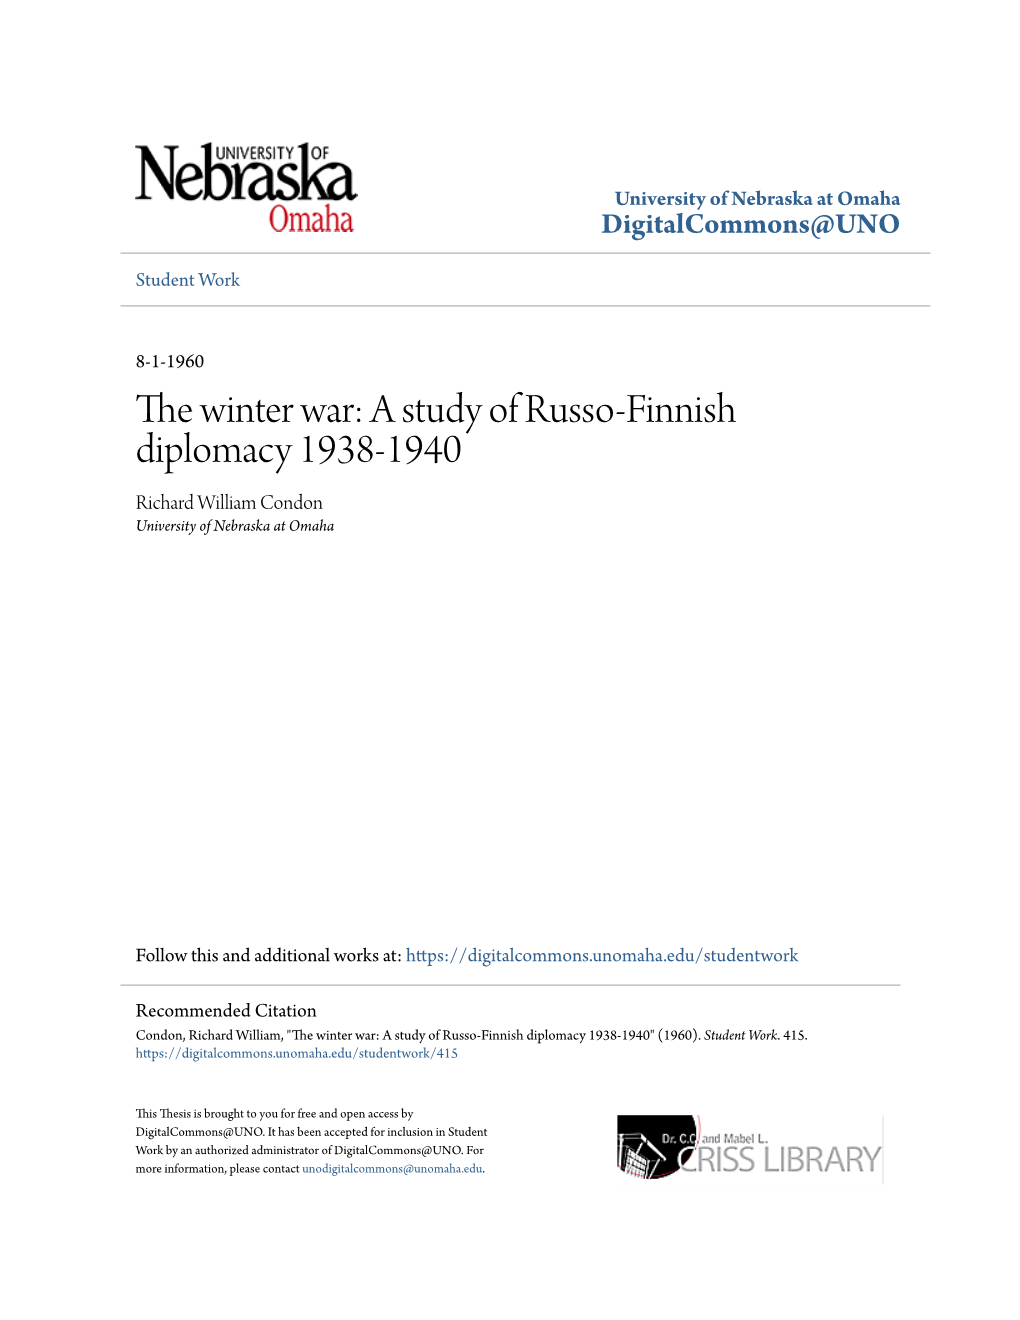 The Winter War: a Study of Russo-Finnish Diplomacy 1938-1940 Richard William Condon University of Nebraska at Omaha